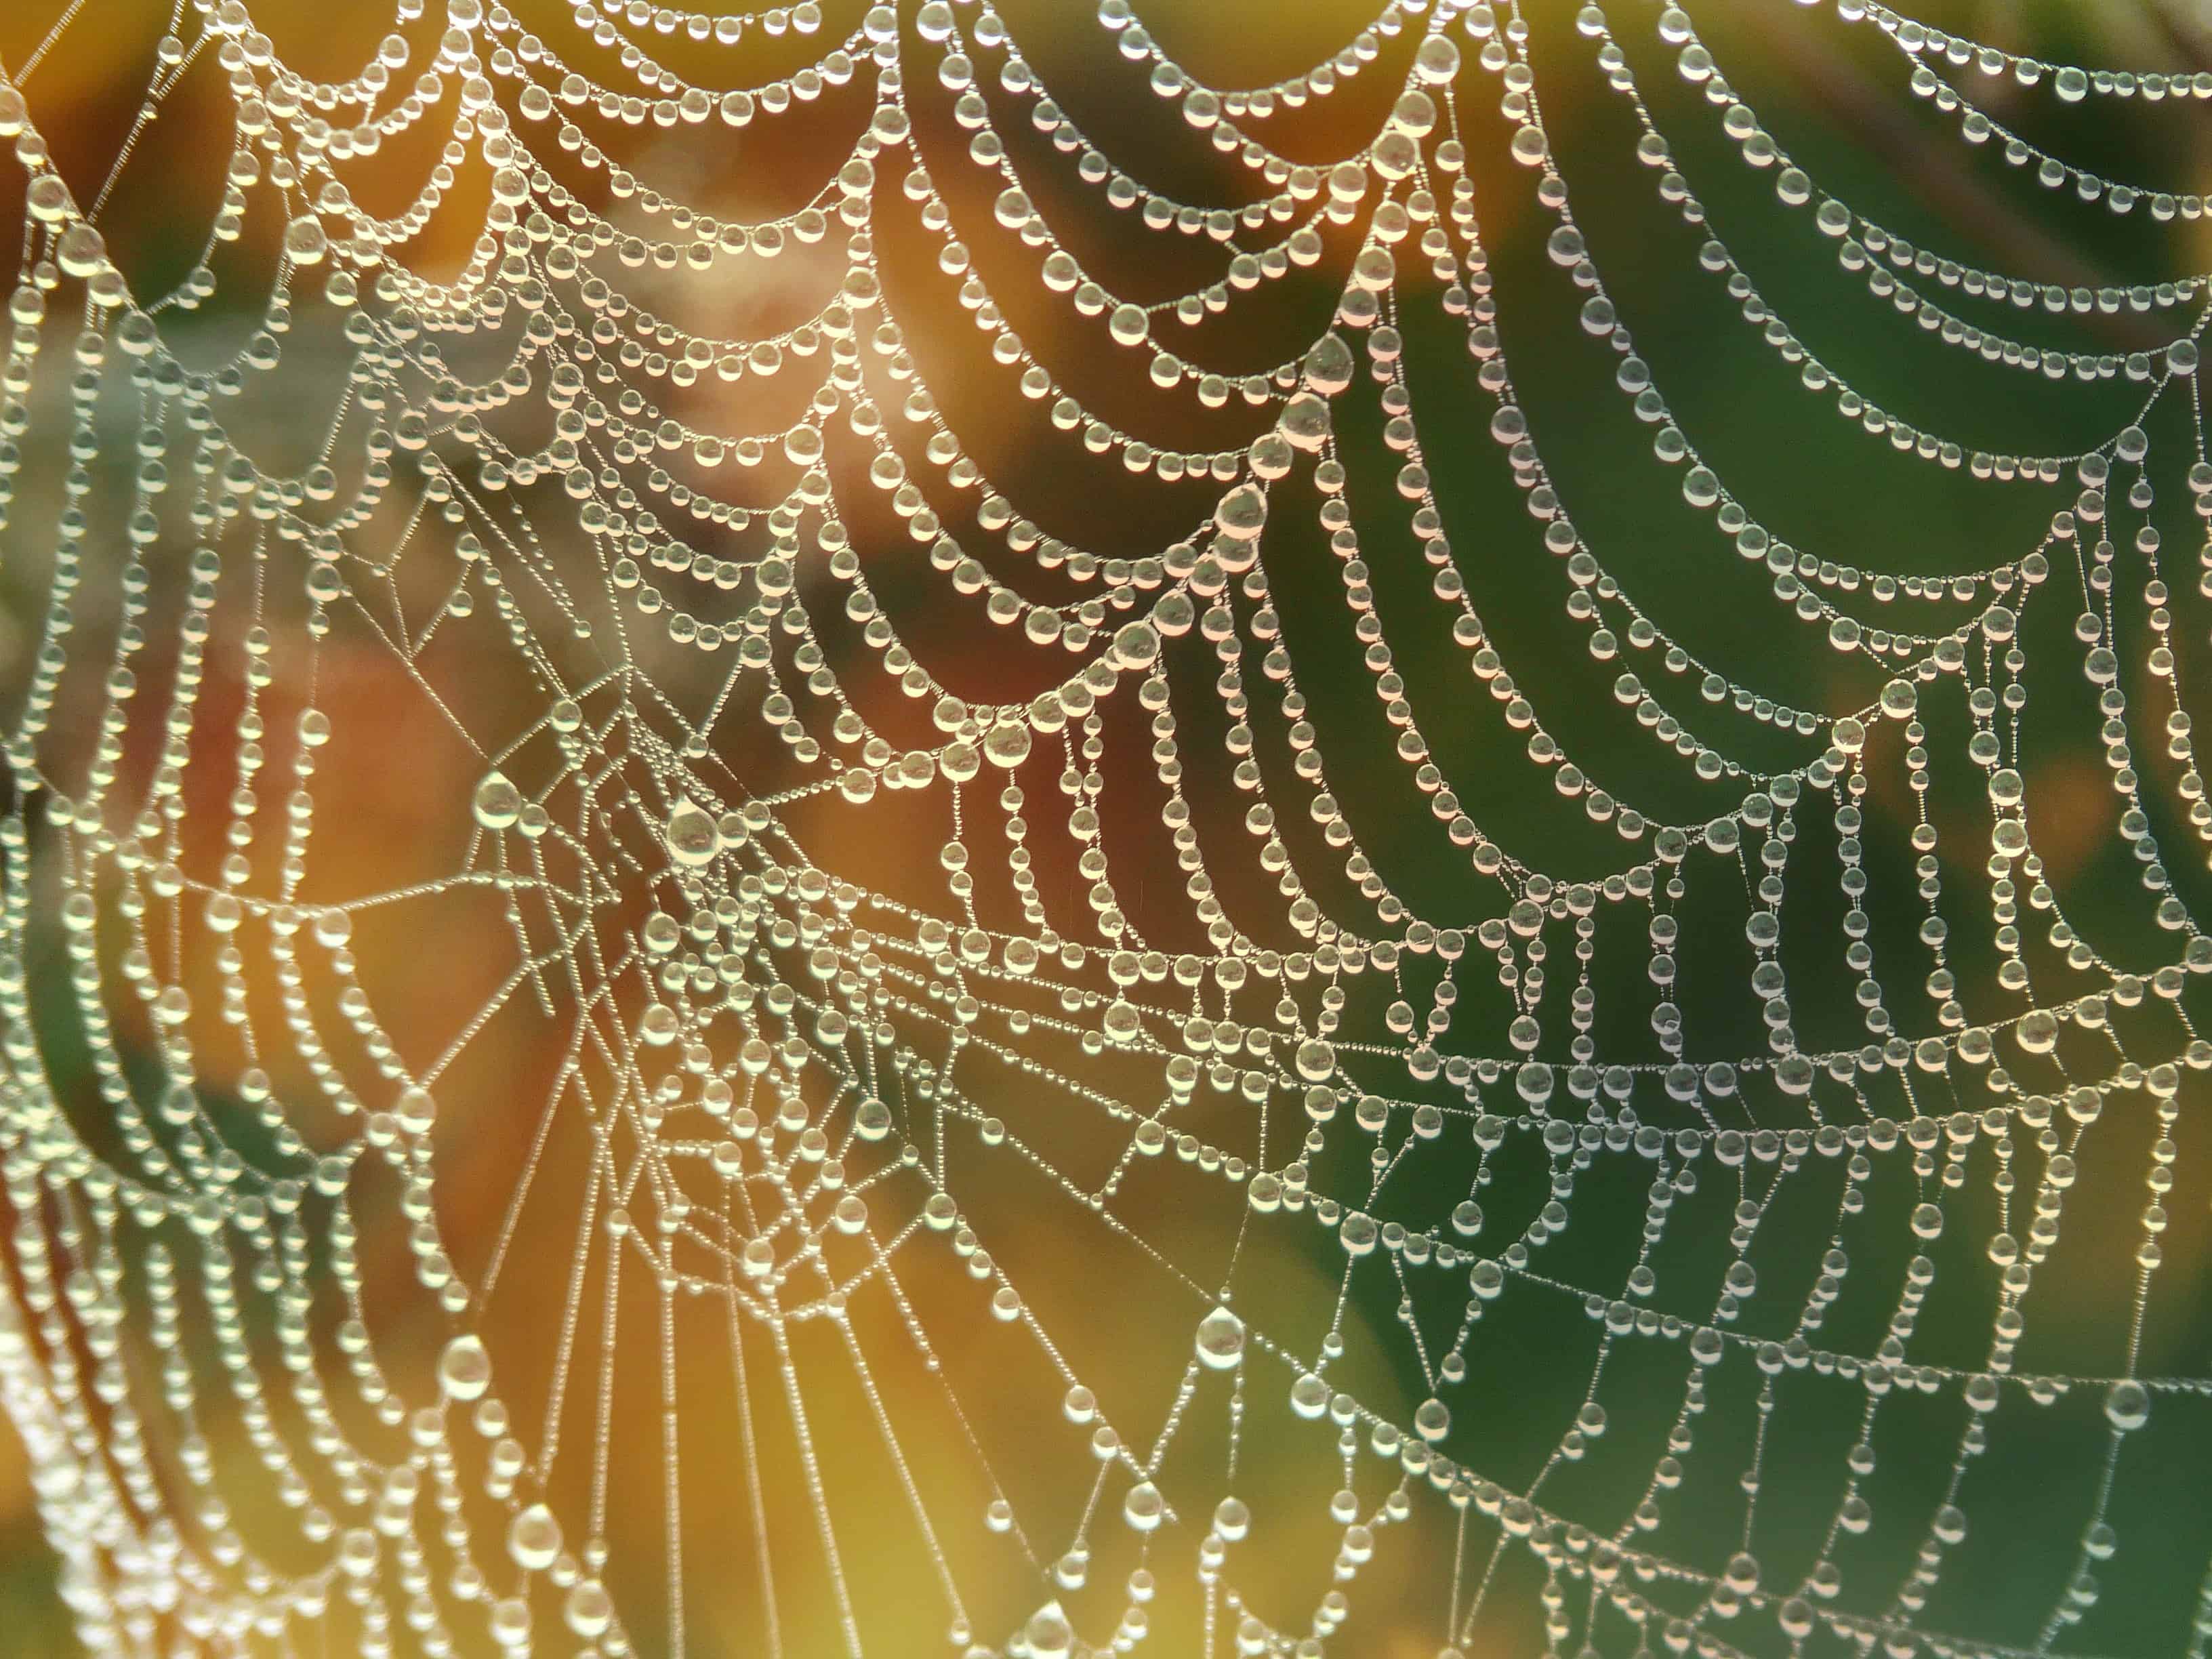 dew-close-material-circle-invertebrate-spider-web-914927-pxhere.com